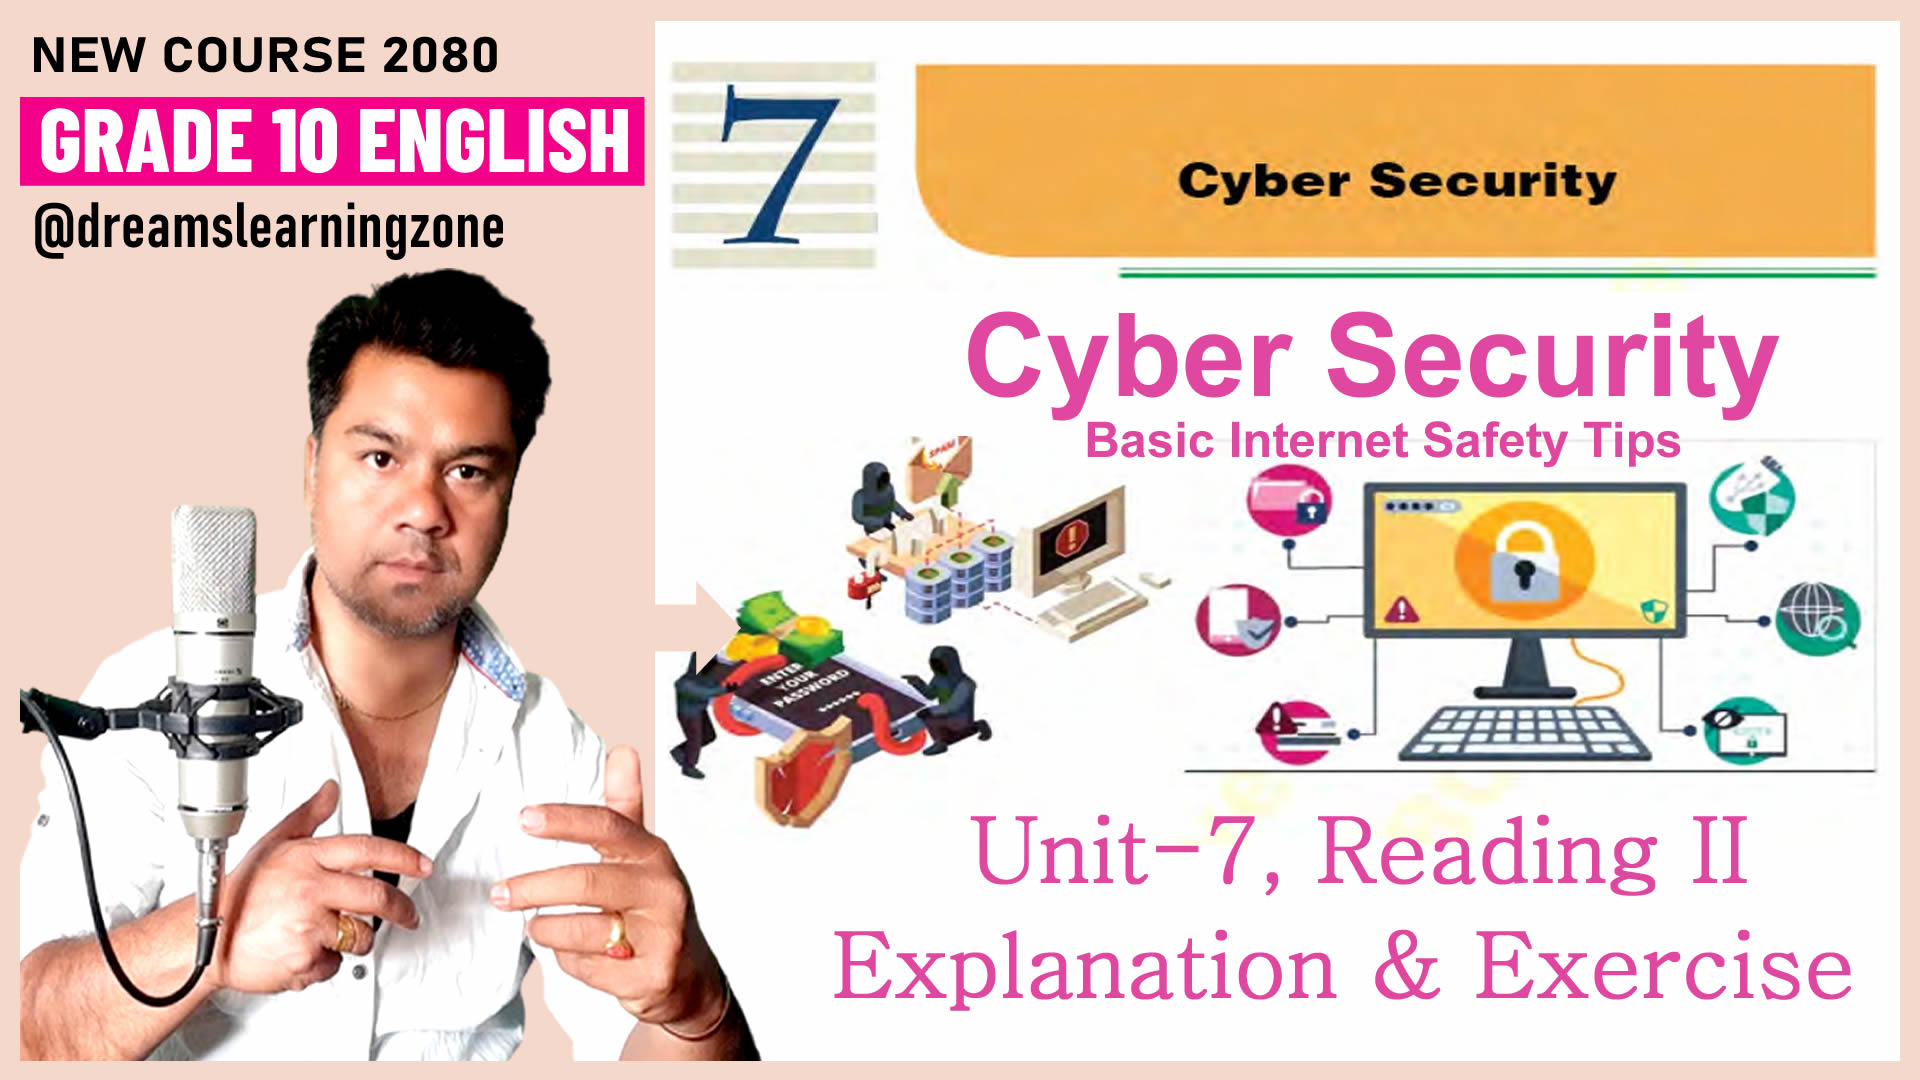 Grade 10 Unit 7, Reading II Cyber Security: Basic Internet Safety Tips Exercises